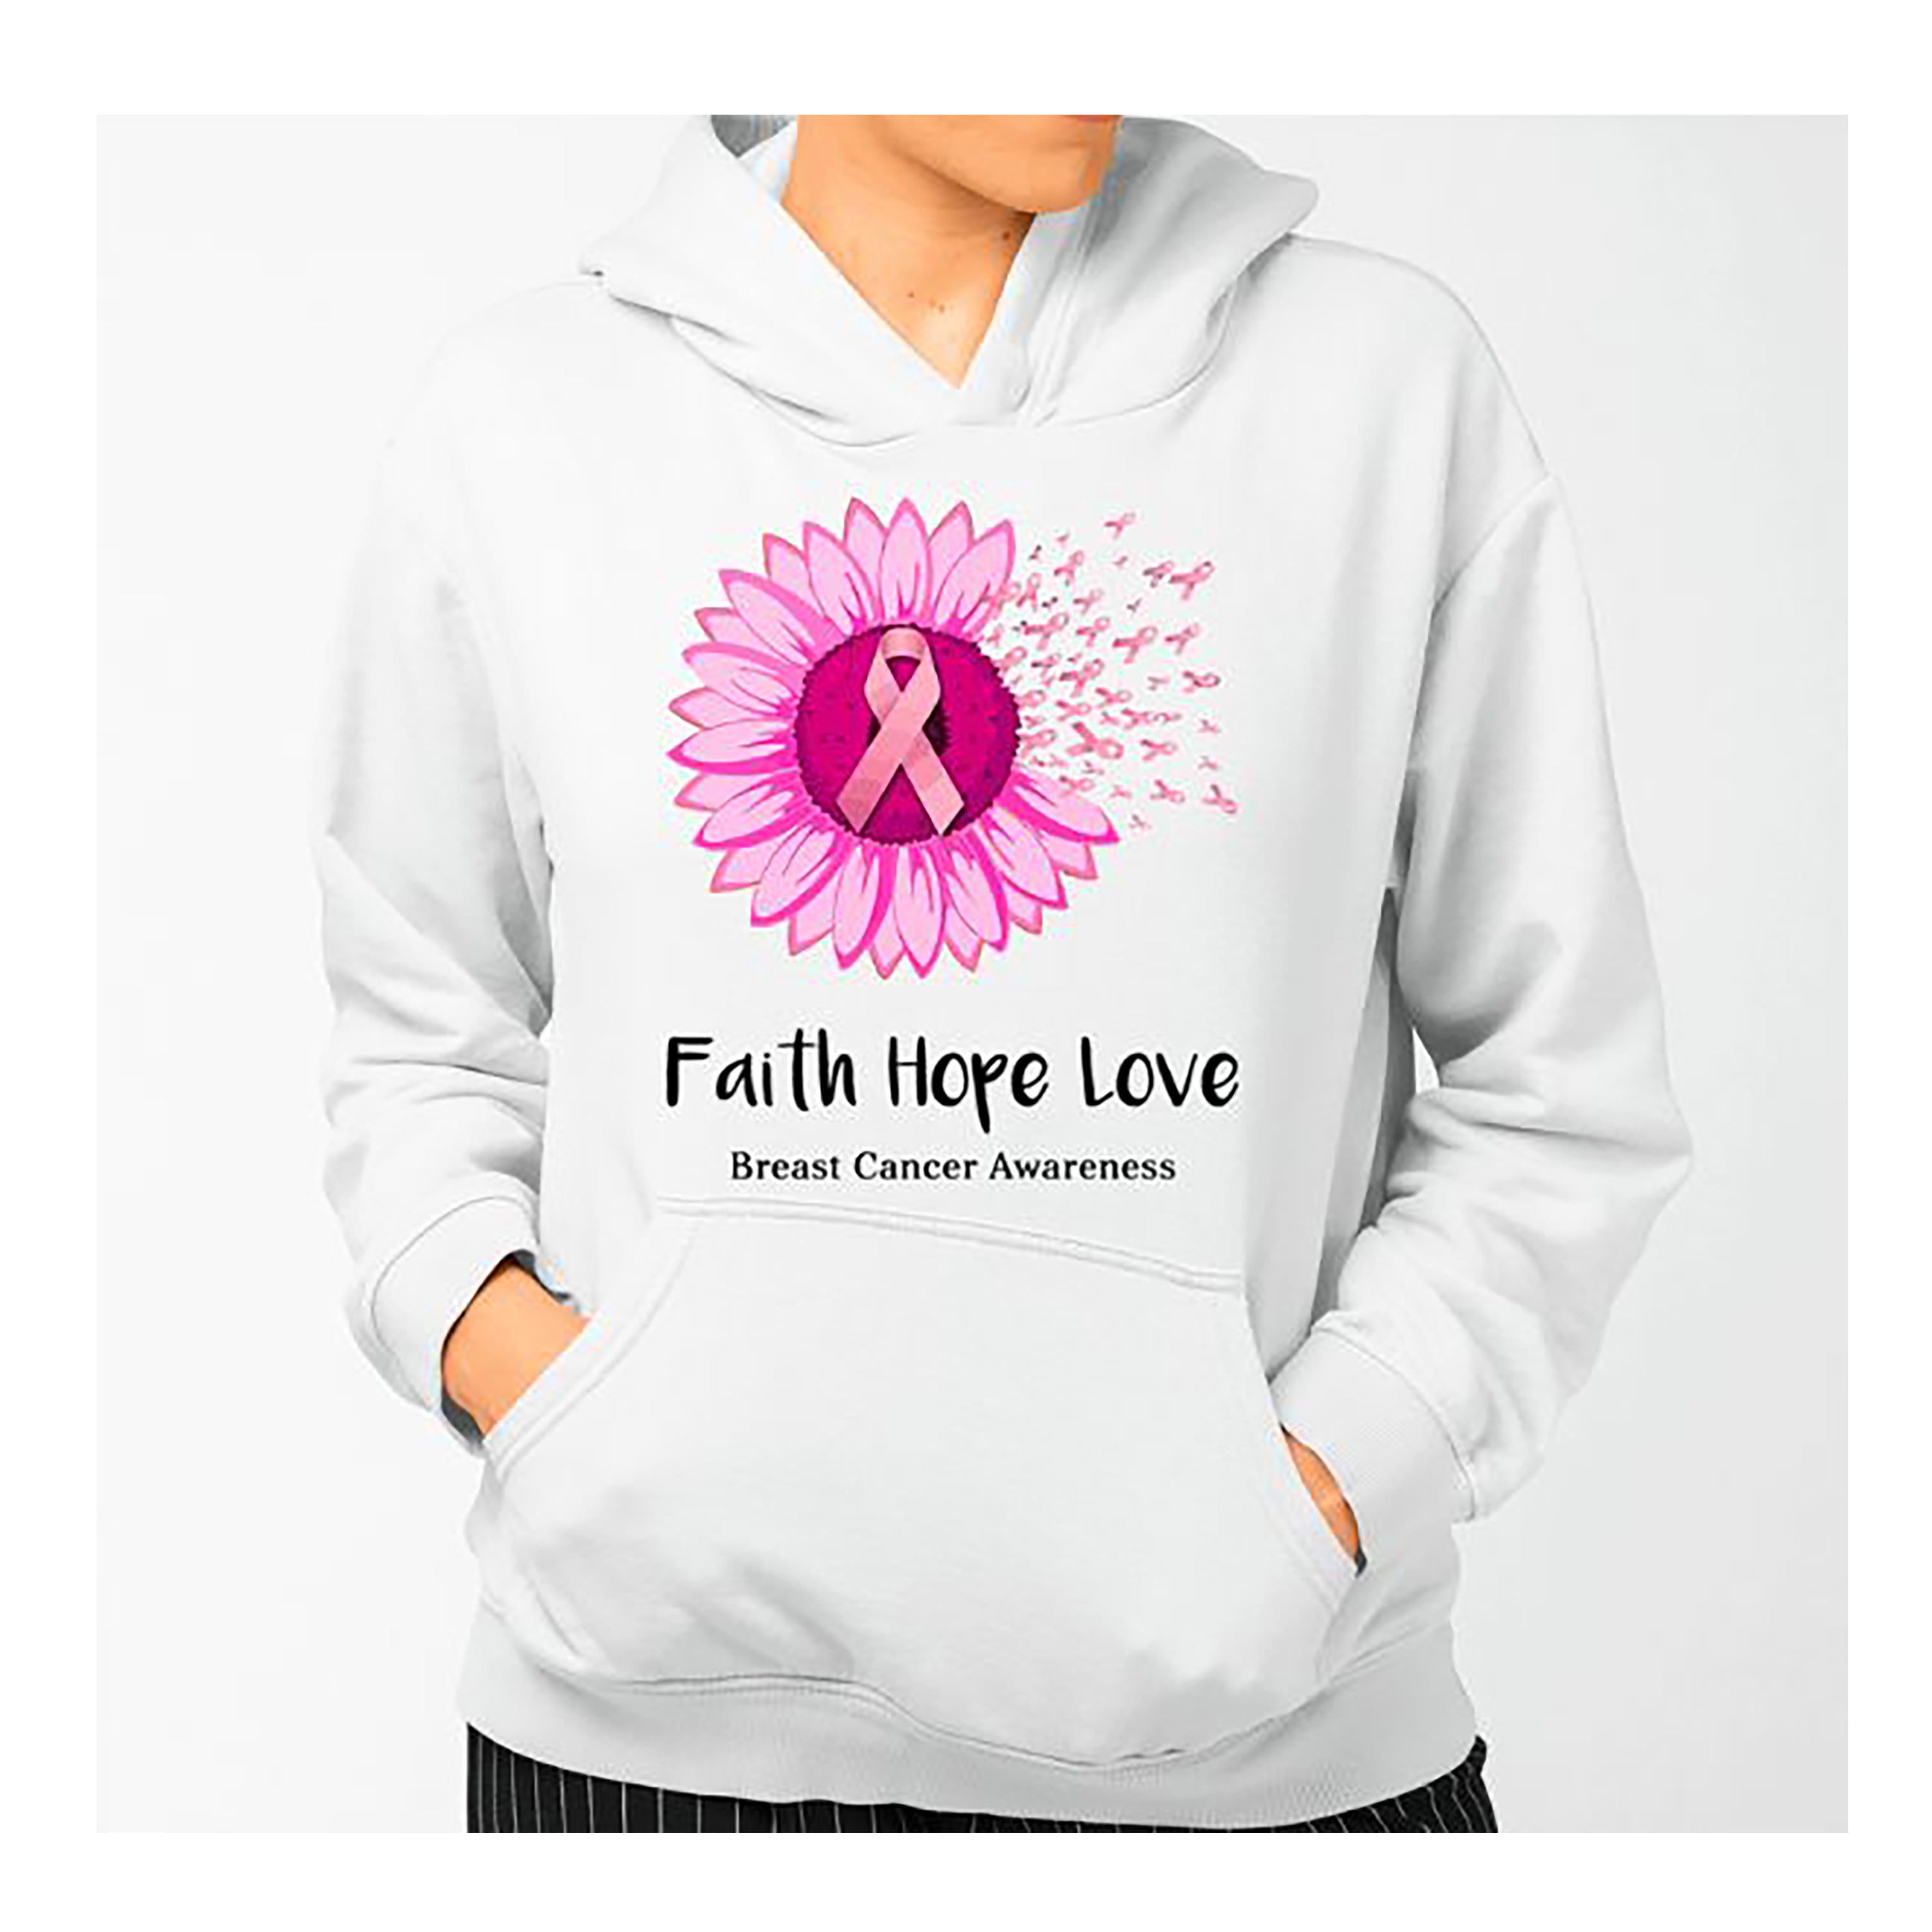 "FAITH HOPE LOVE" Hoodie and Sweatshirt